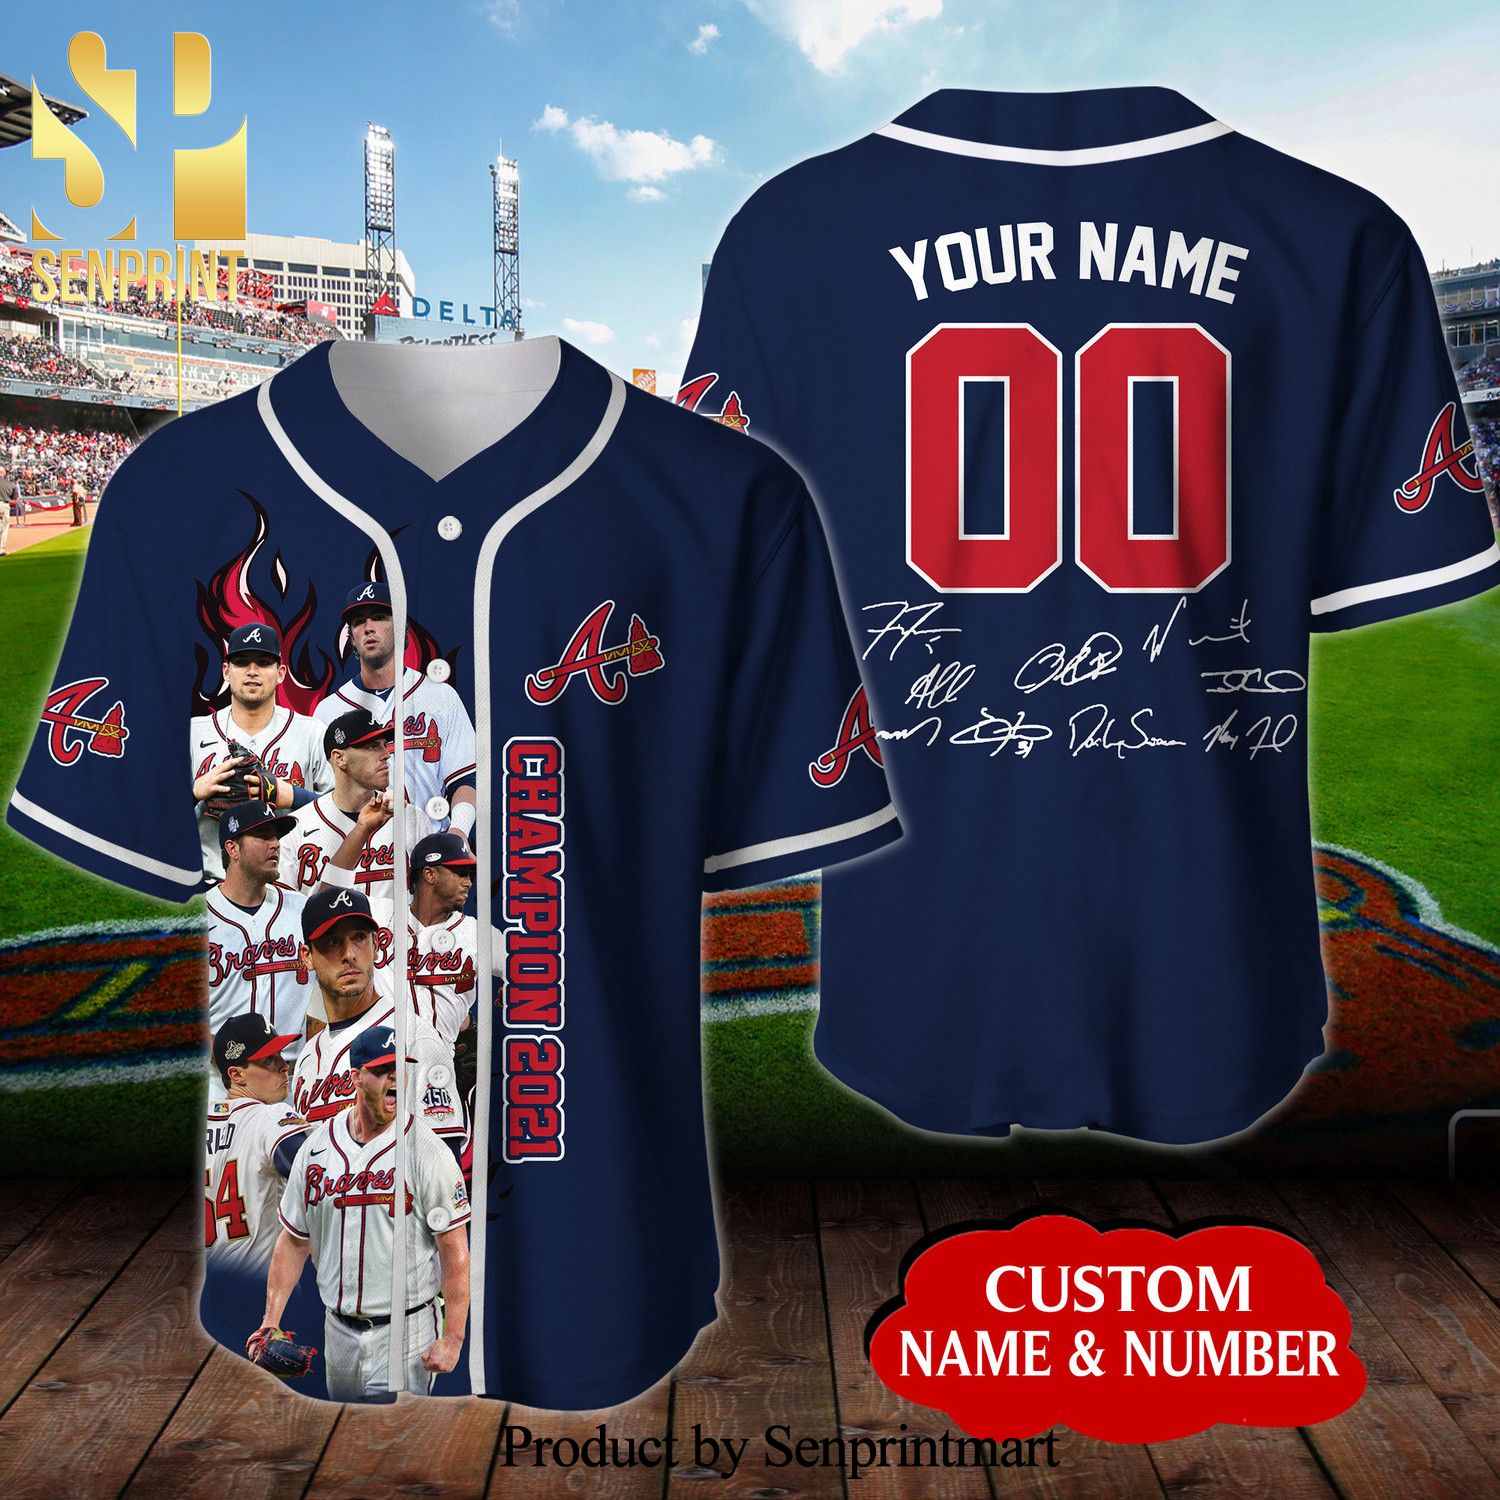 Personalized Atlanta Braves Championship 2021 Full Printing Baseball Jersey  - Navy - Senprintmart Store